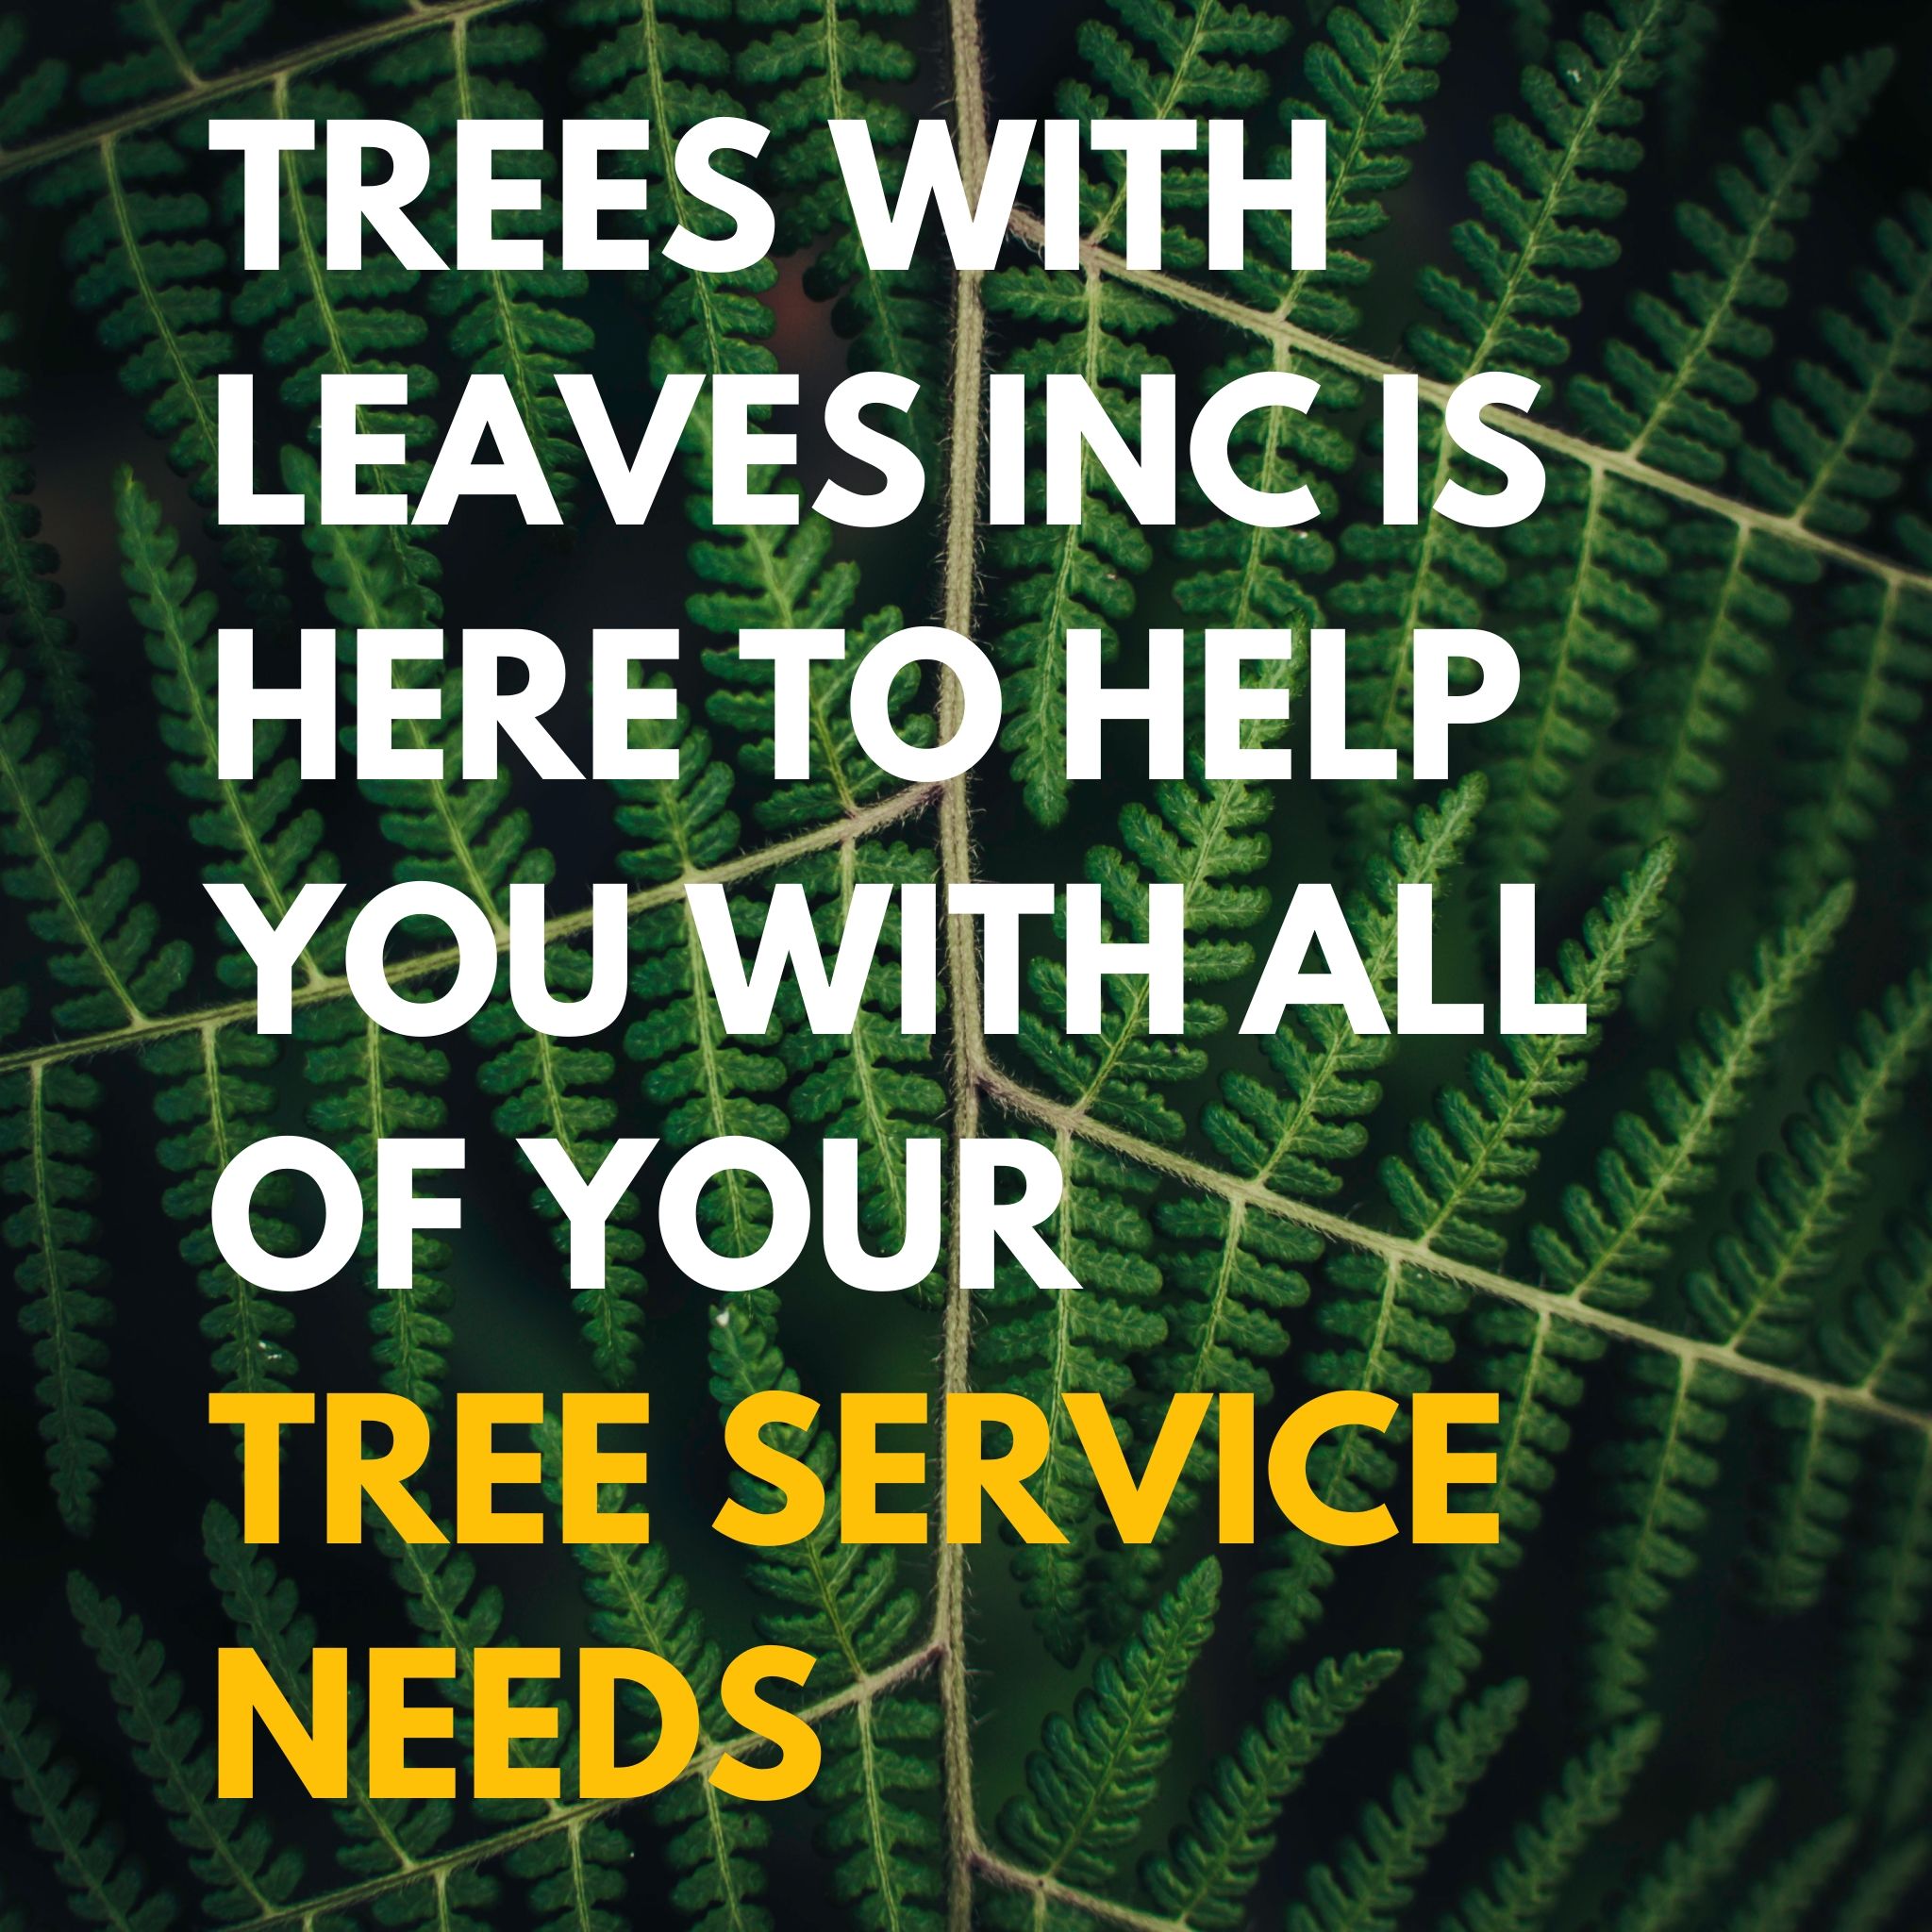 Tree Service, Palm Trimming, Tree Trimming, Stump Grinding, Fertilization